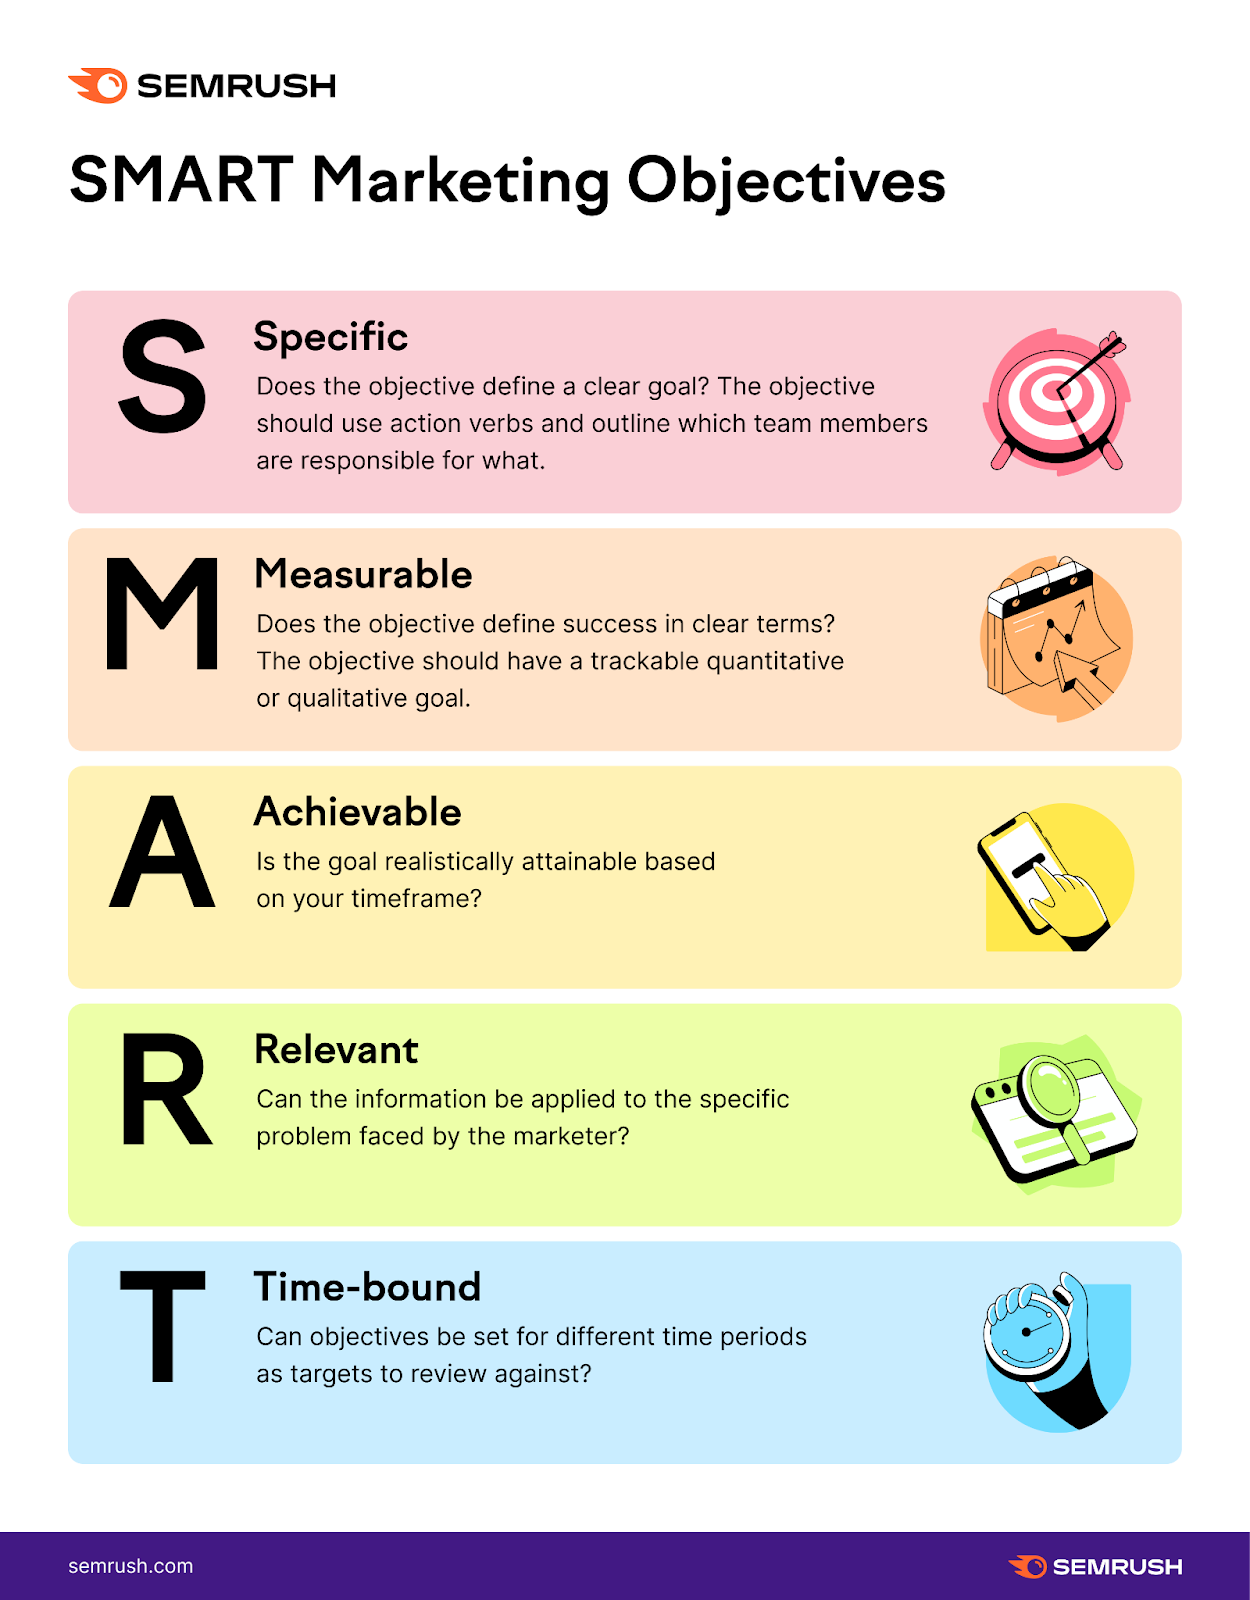 an image explaining SMART Marketing Objectives by Semrush